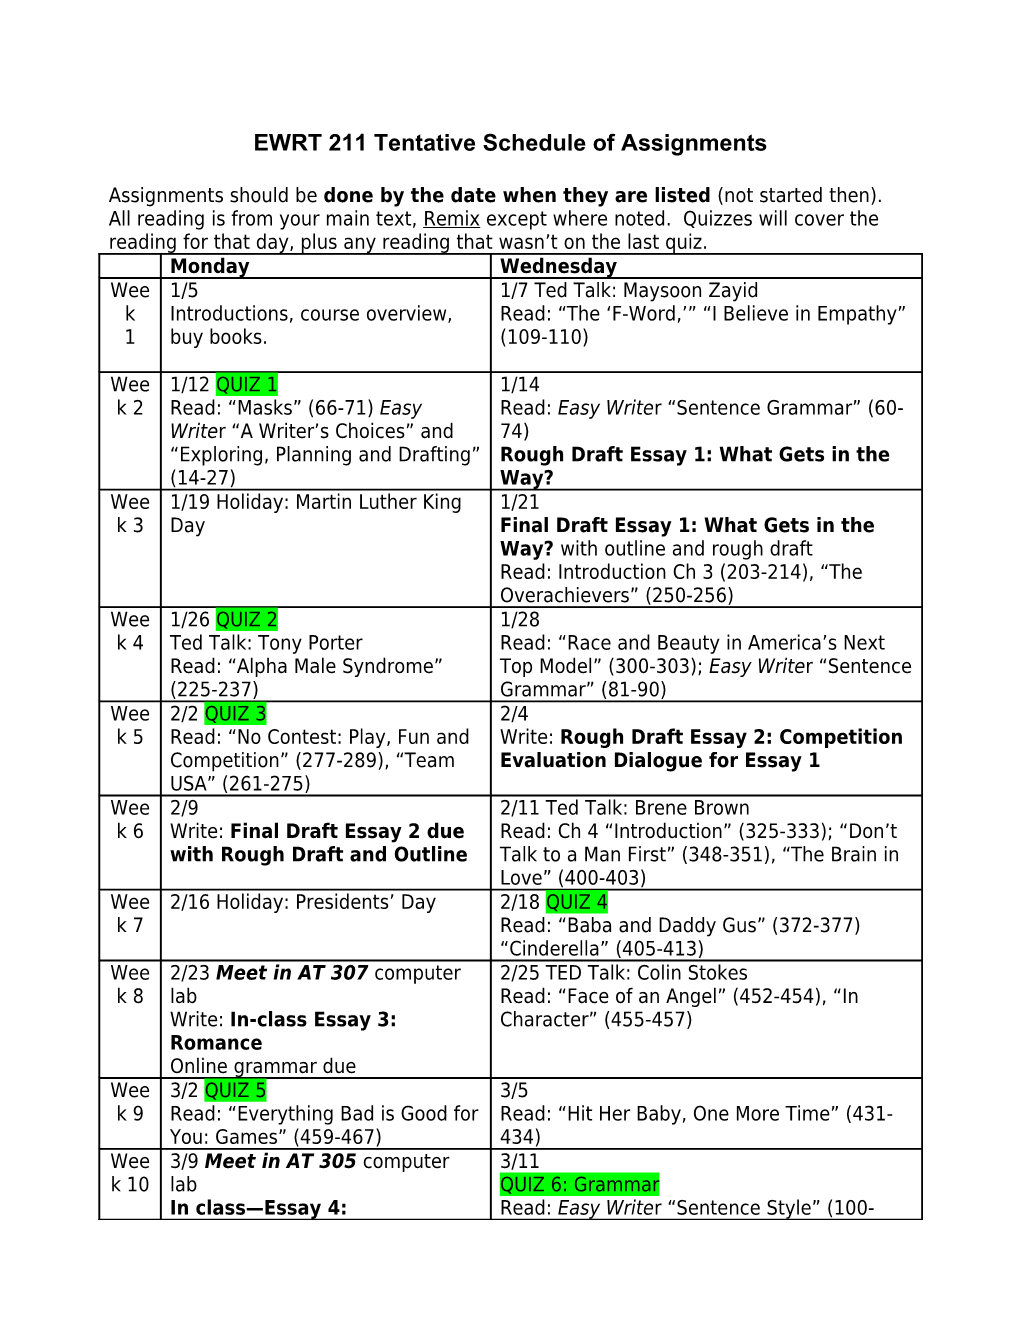 EWRT 100B Tentative Schedule of Assignments